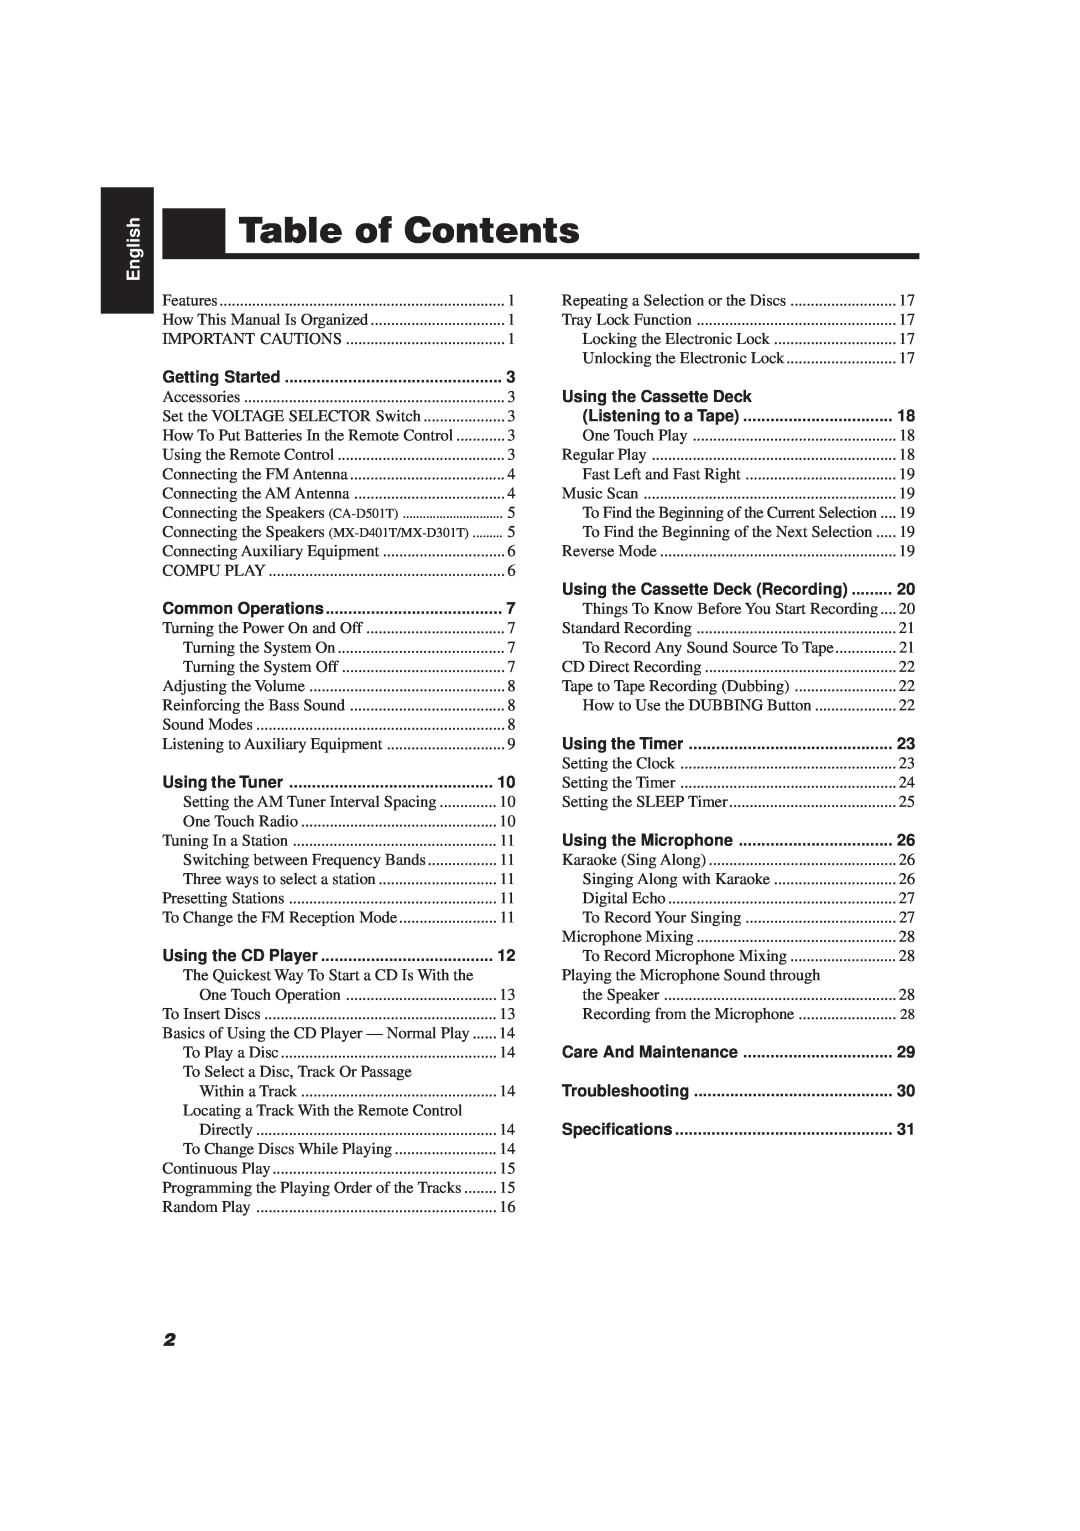 JVC MX-D401T, CA-D501T manual Table of Contents, English 